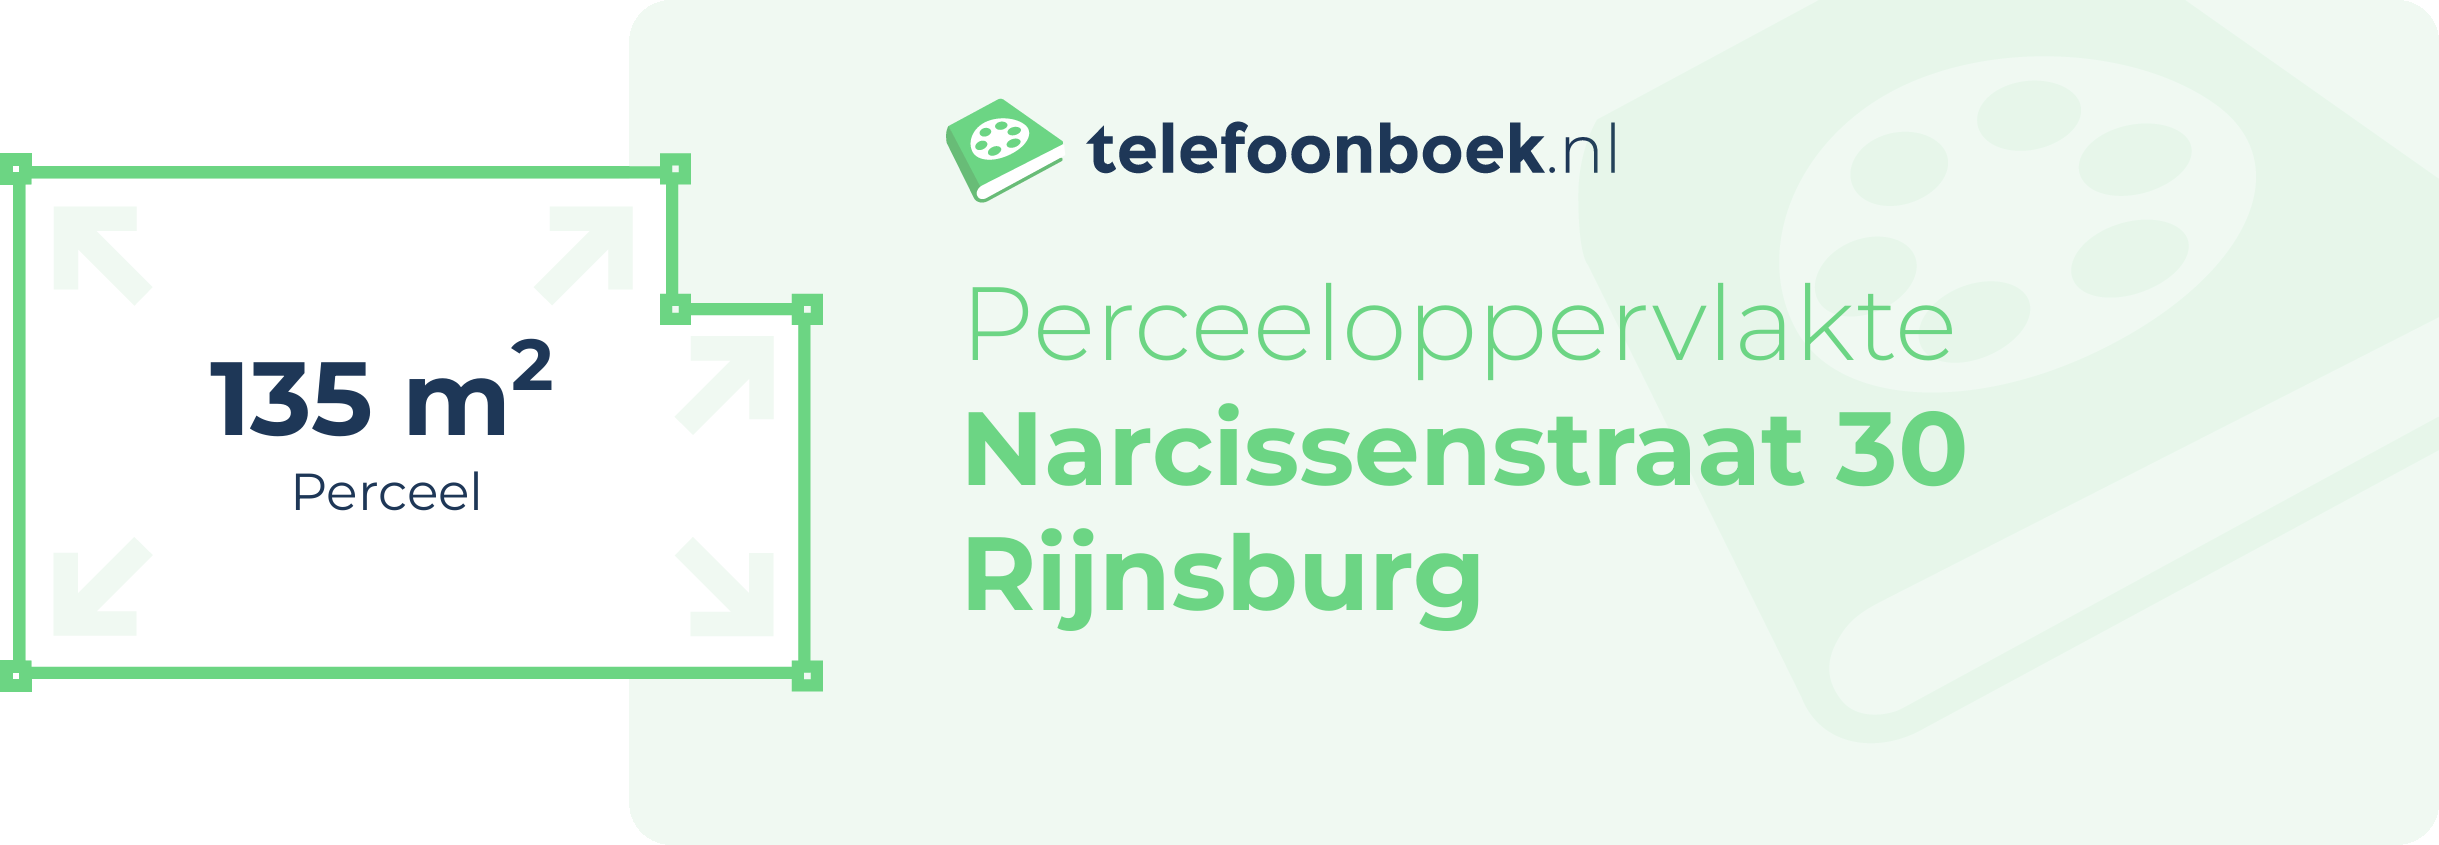 Perceeloppervlakte Narcissenstraat 30 Rijnsburg